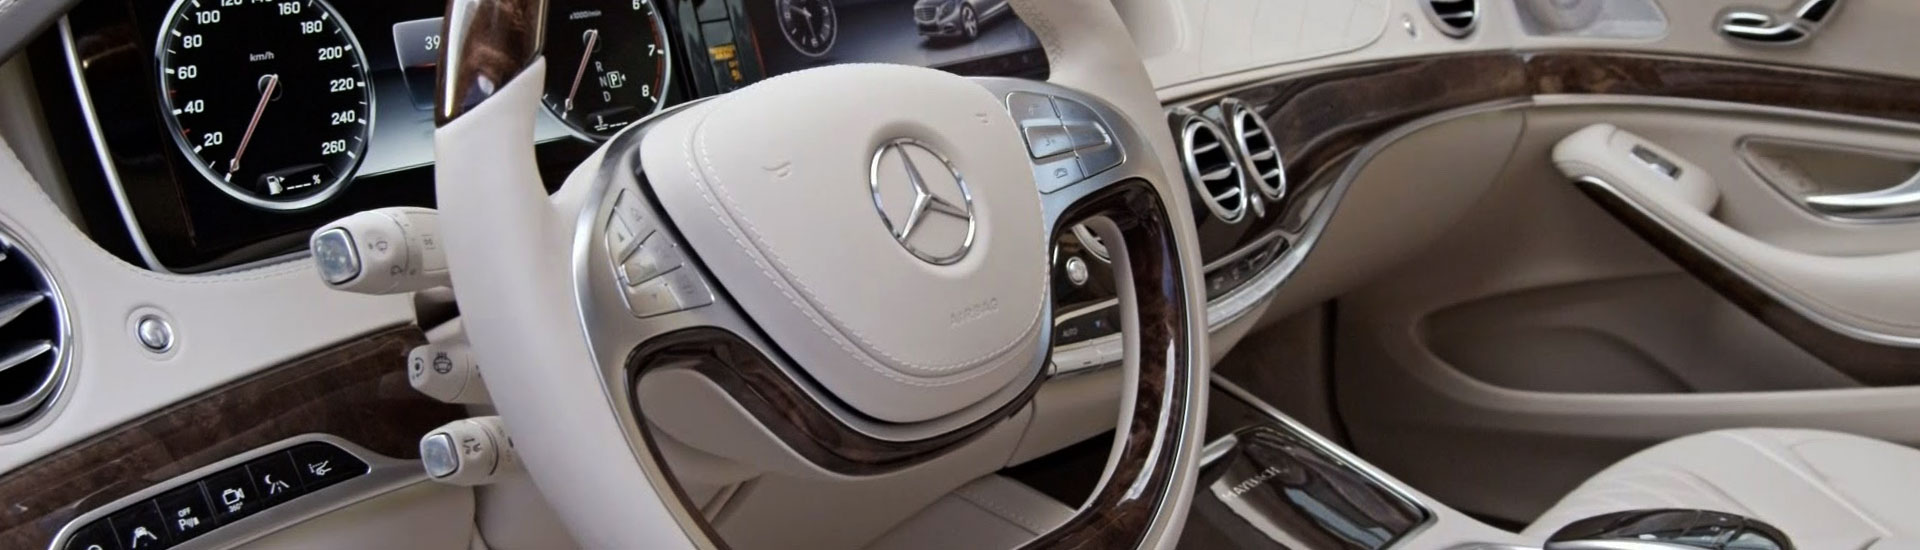 Red dash kit inside Mercedes-Benz